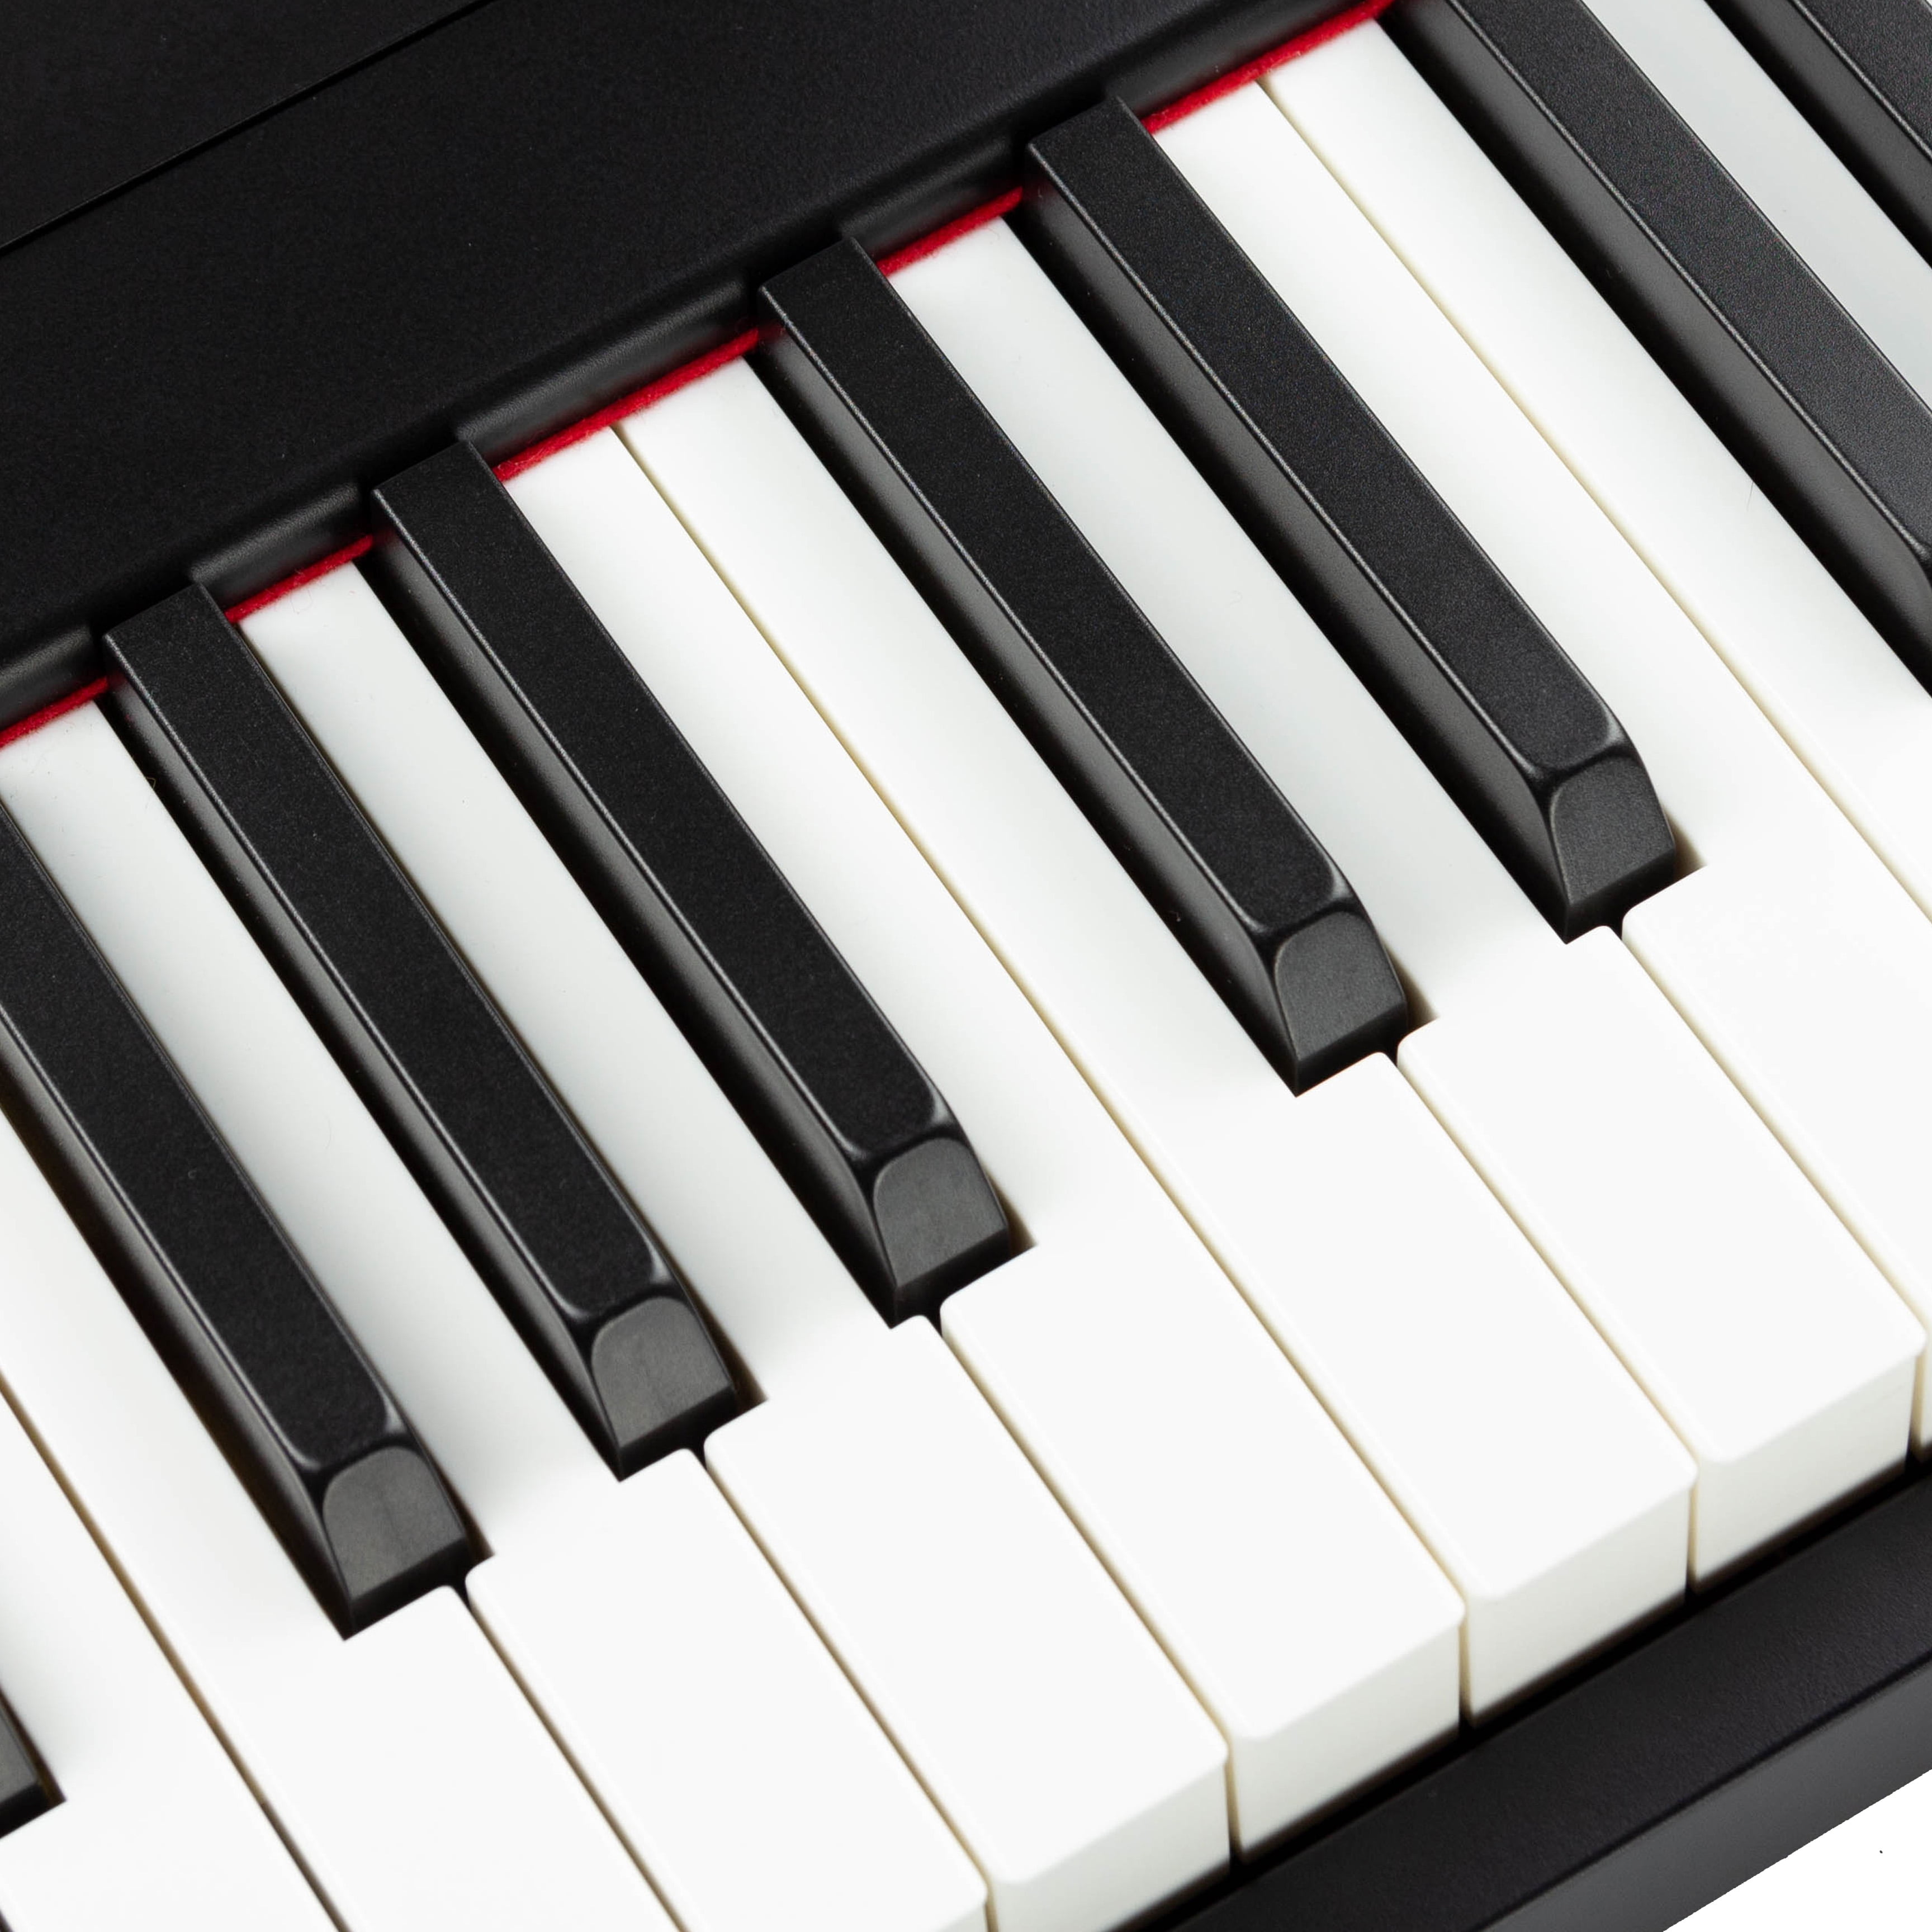 RockJam 88-Key Beginner Digital Piano, Black & Xfinity Heavy-Duty,  Double-X, Pre-Assembled, Infinitely Adjustable Piano Keyboard Stand with  Locking